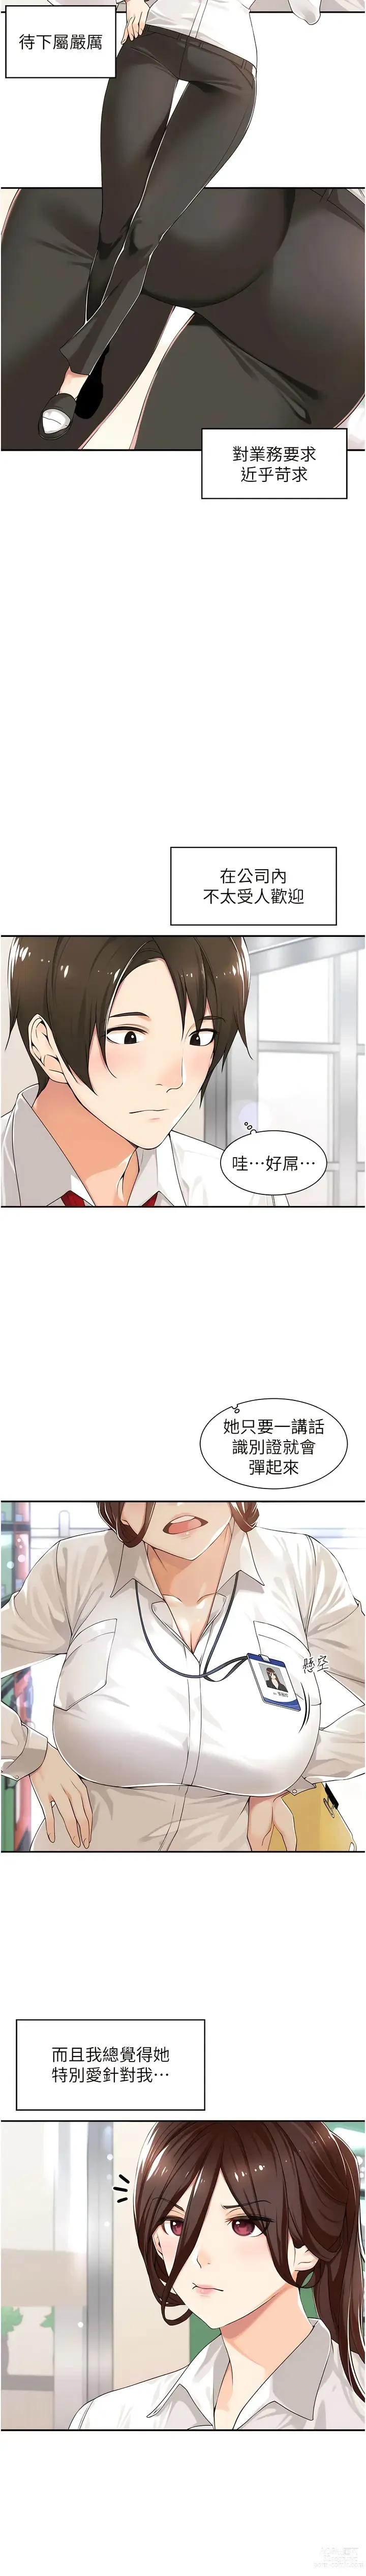 Page 7 of manga 工做狂女上司 1-40 END